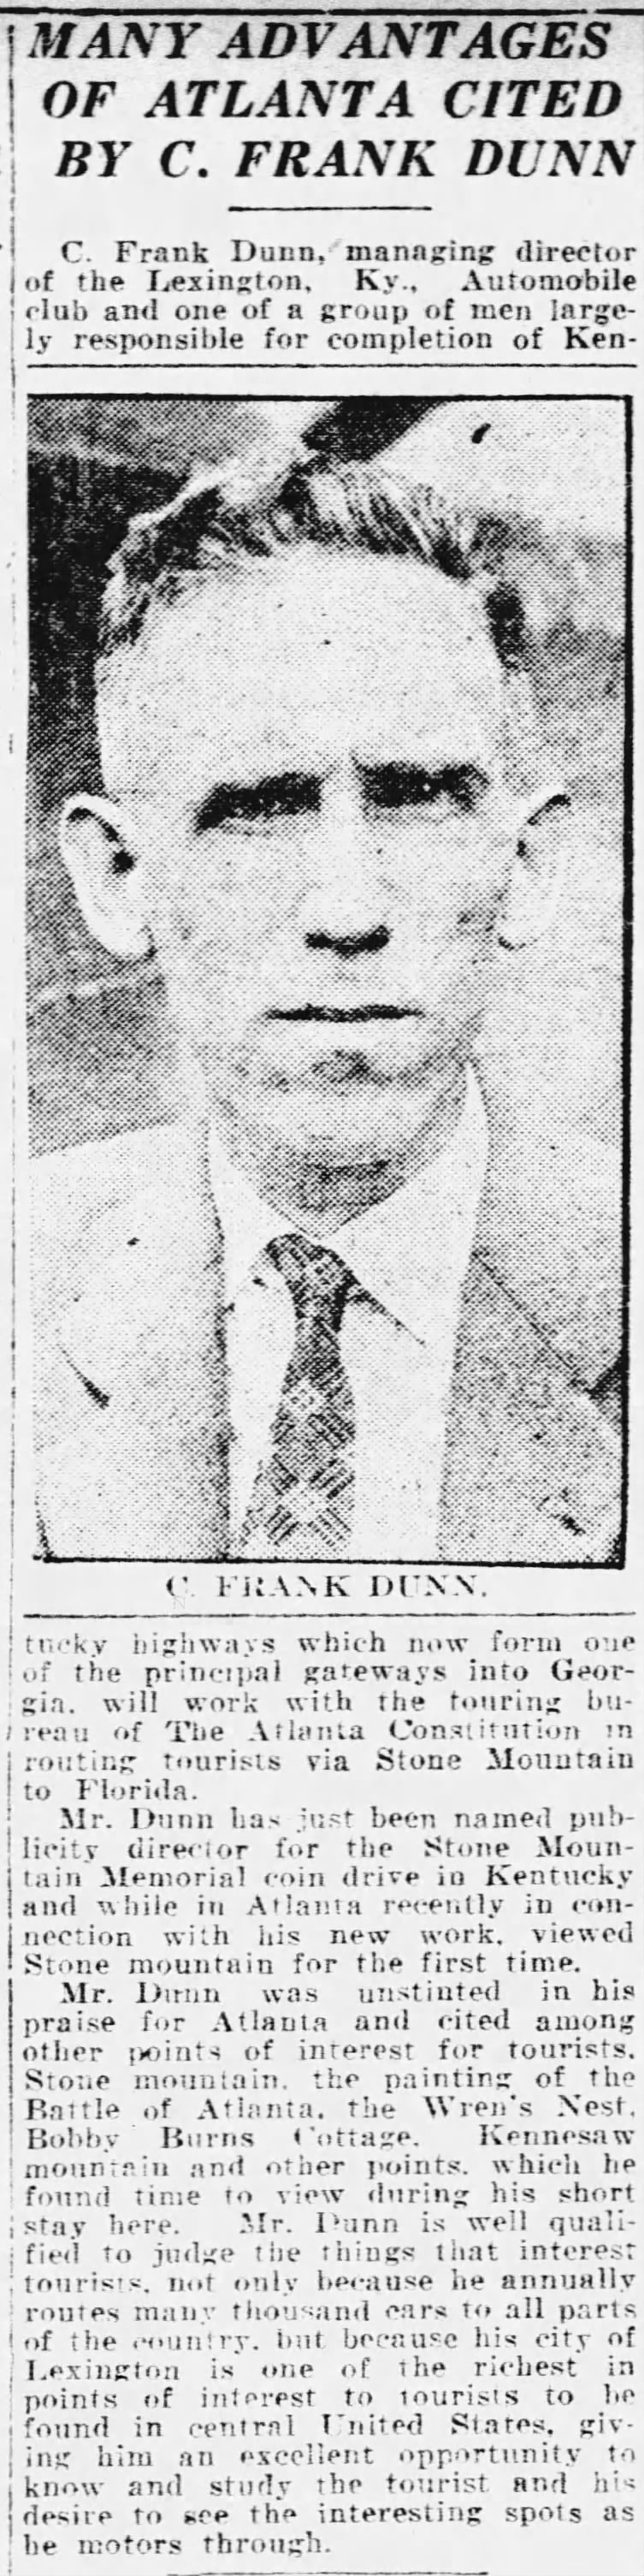 Mr Frank C Dunn Publicity Director